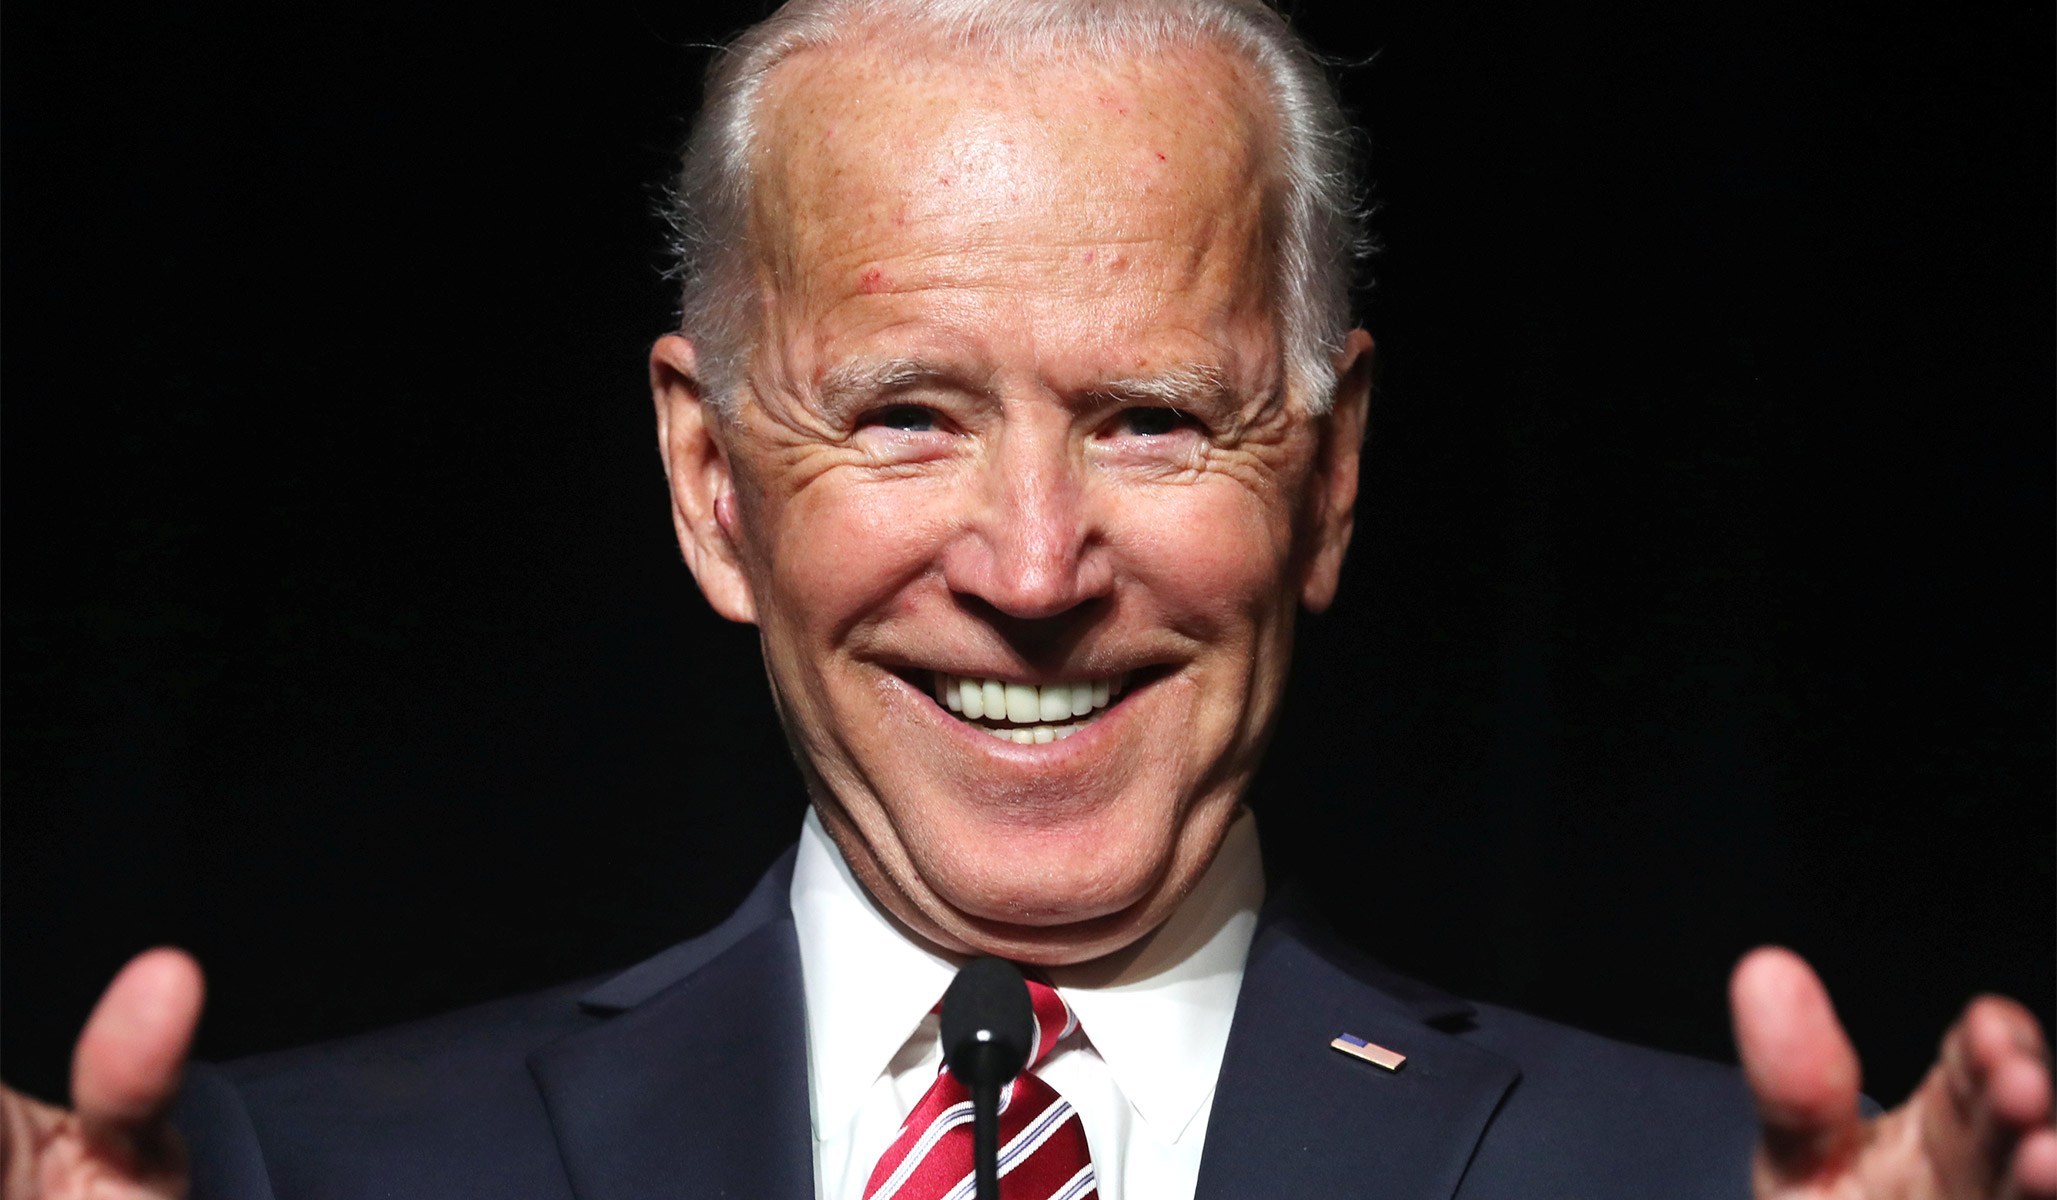 Joe Biden smiling